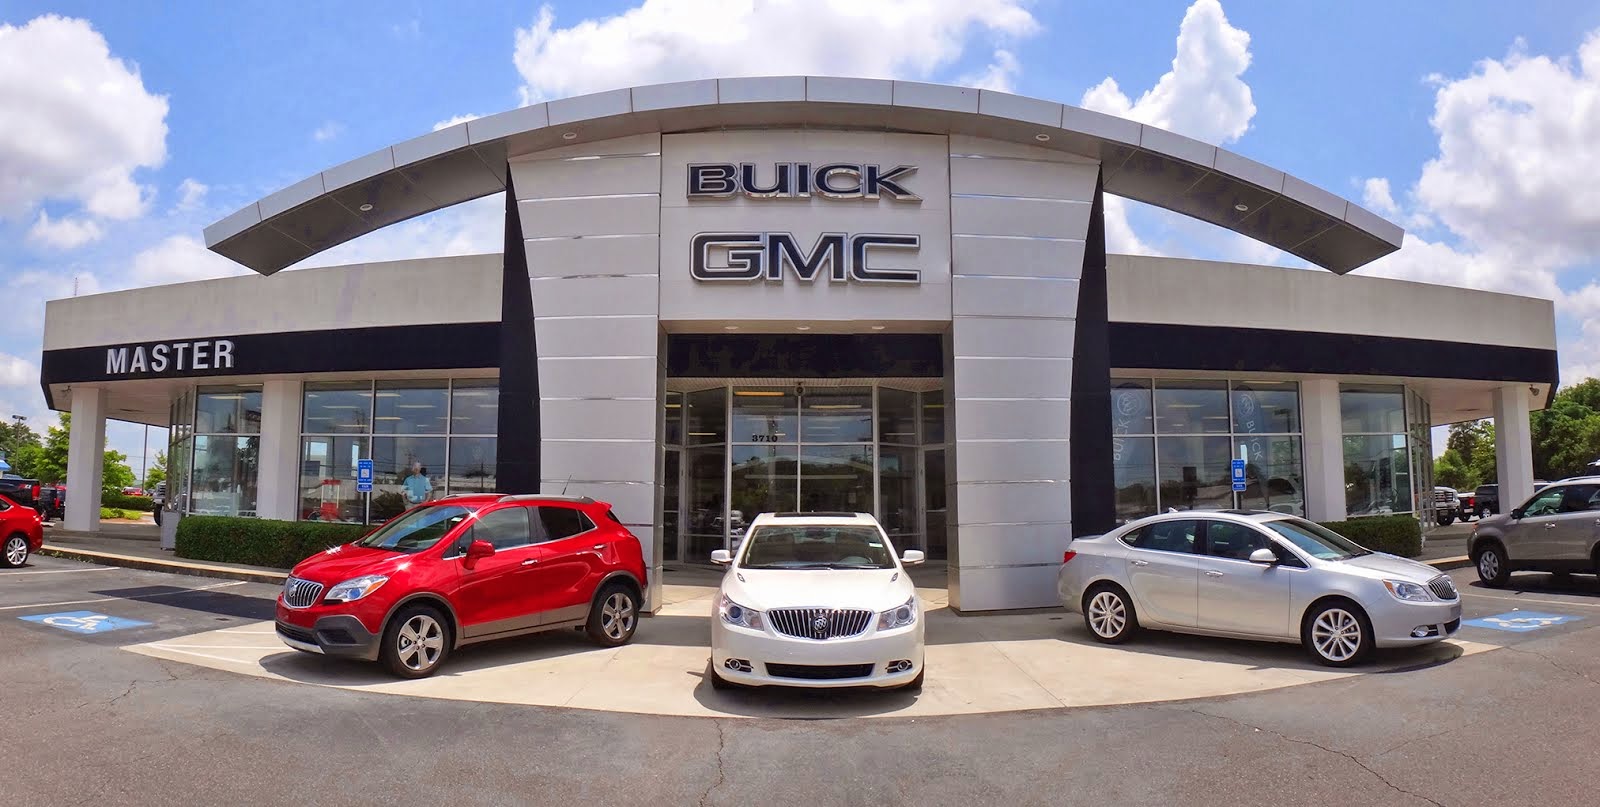 "Like" Master Buick GMC, click here: